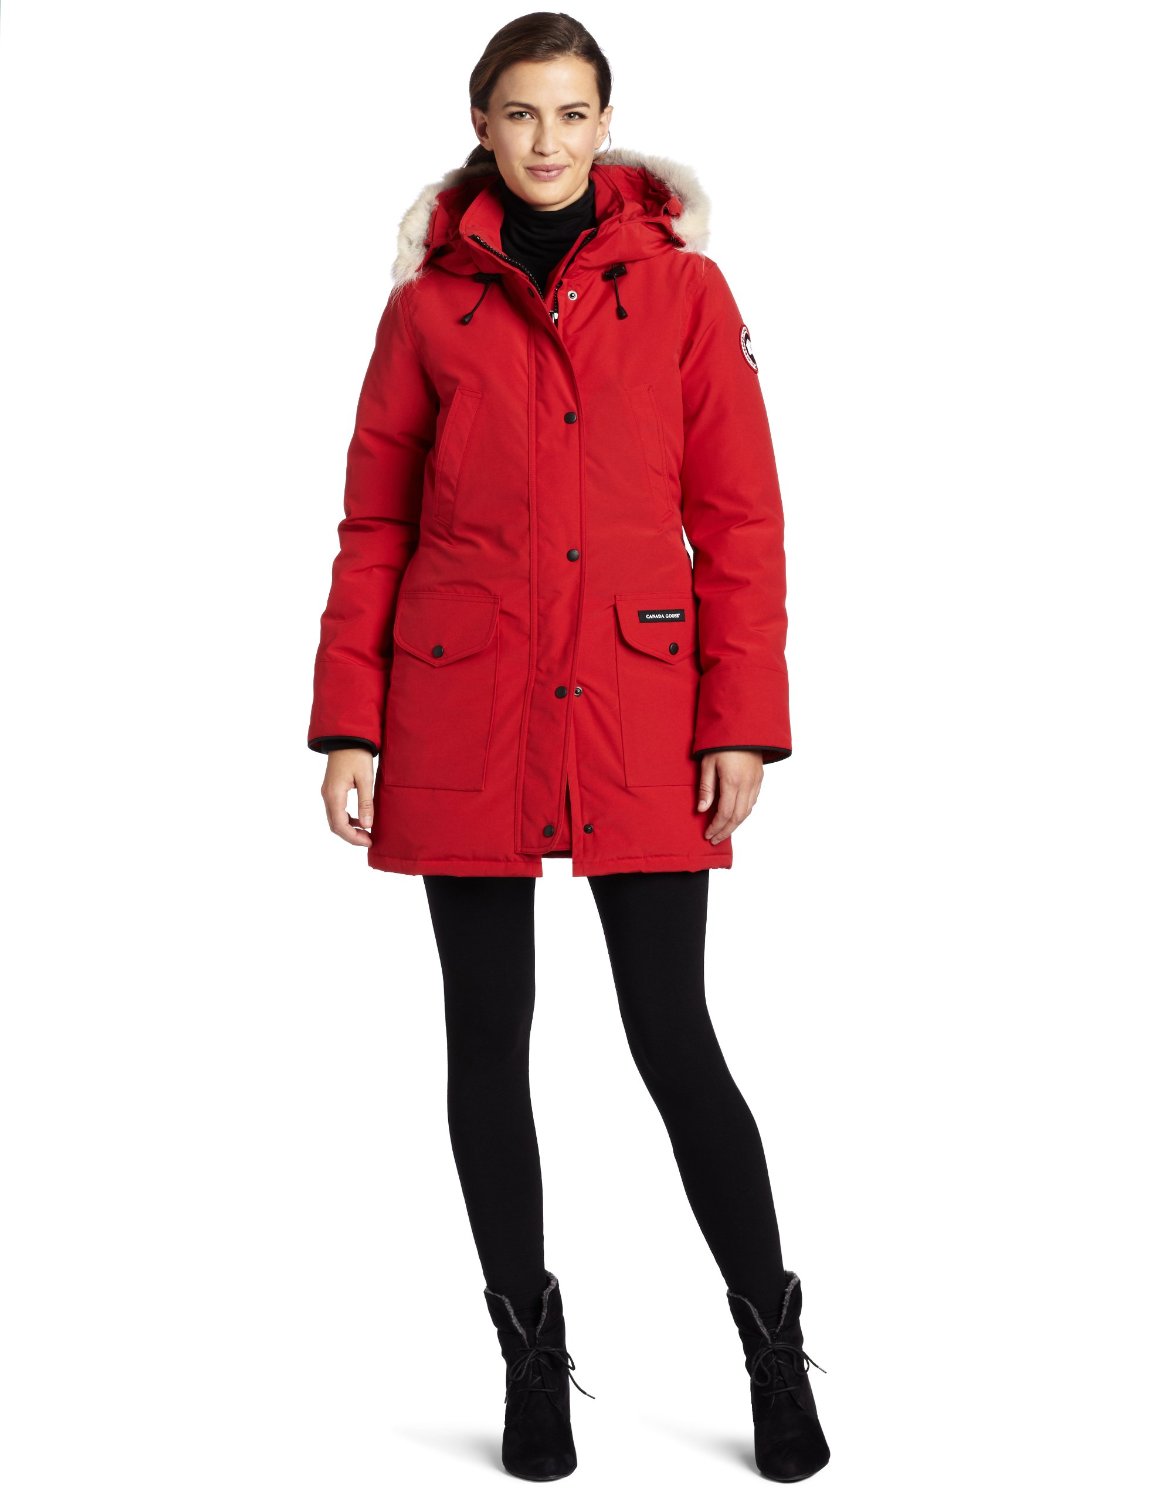 Canada Goose toronto sale authentic - Canada Goose Trillium Parka best winter Parka? - My Fashion Wants